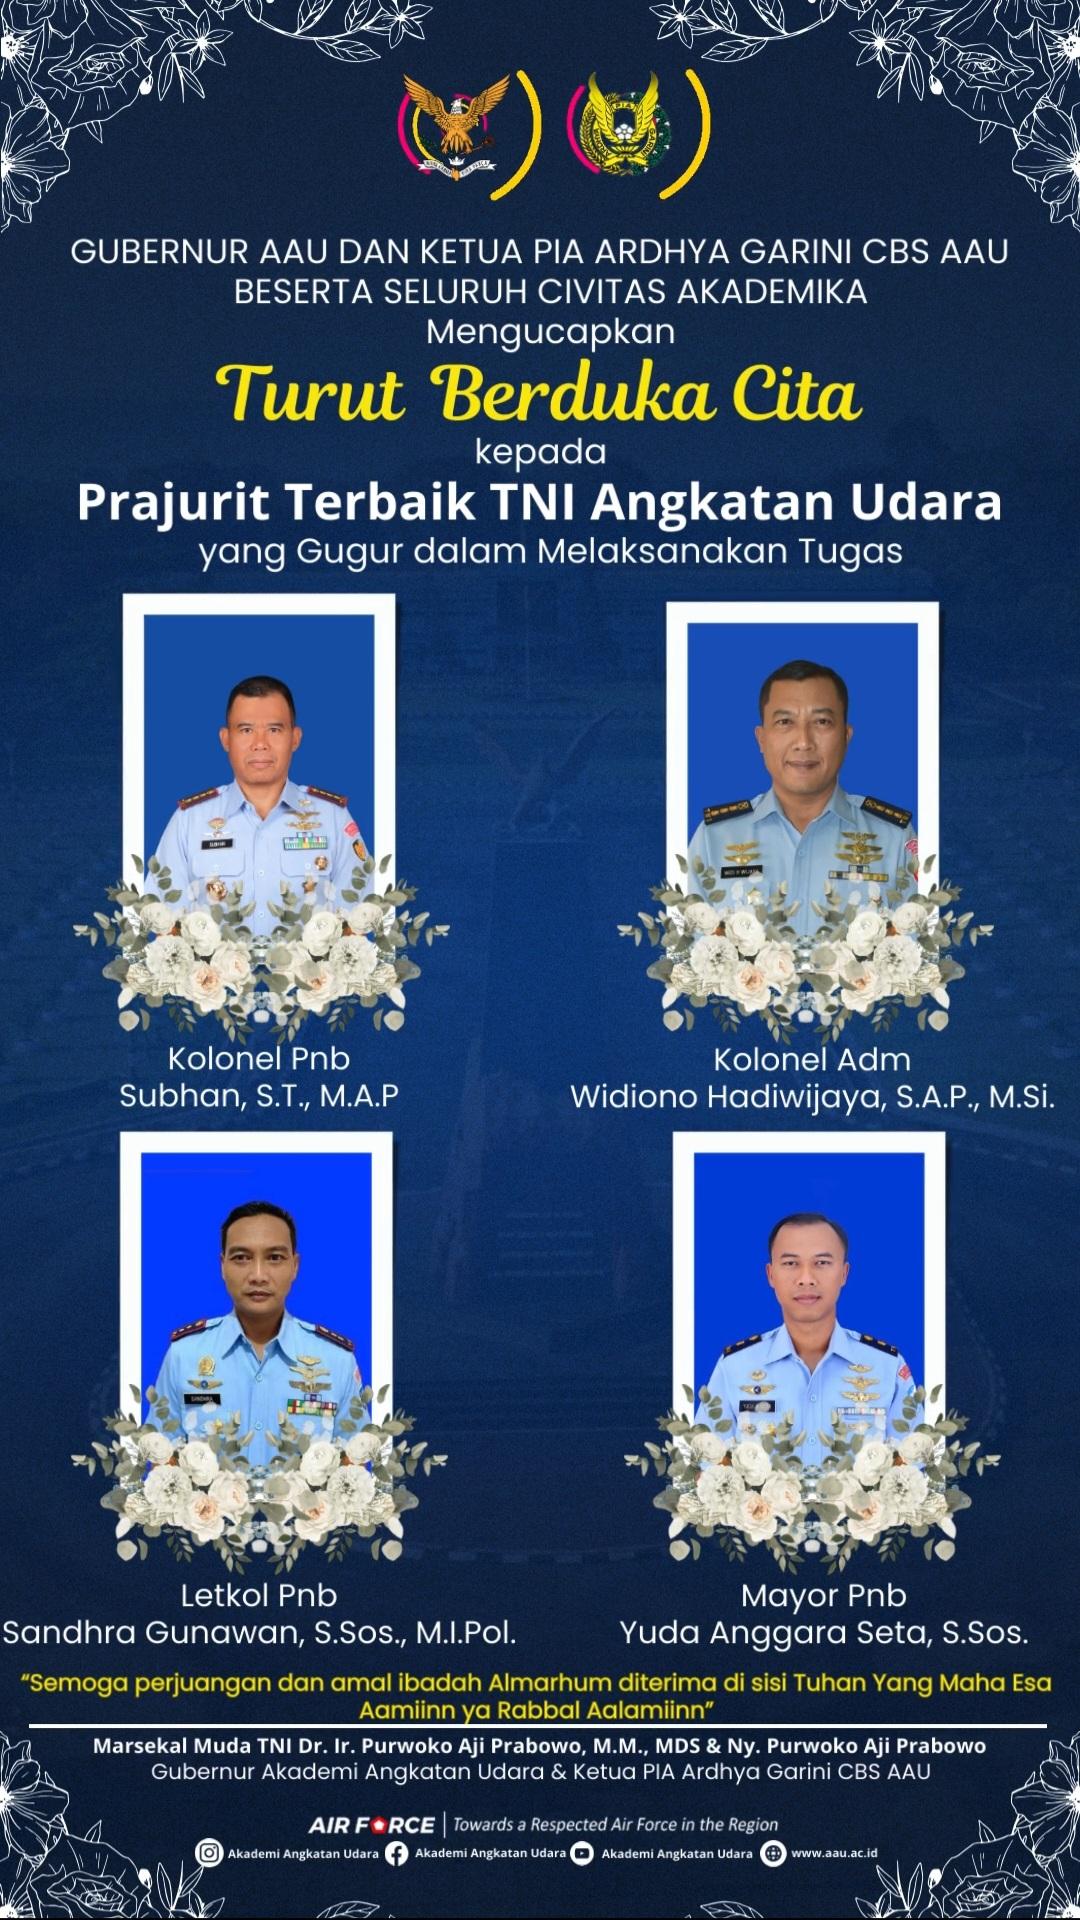 Turut Berduka Cita kepada Prajurit Terbaik TNI Angkatan Udara